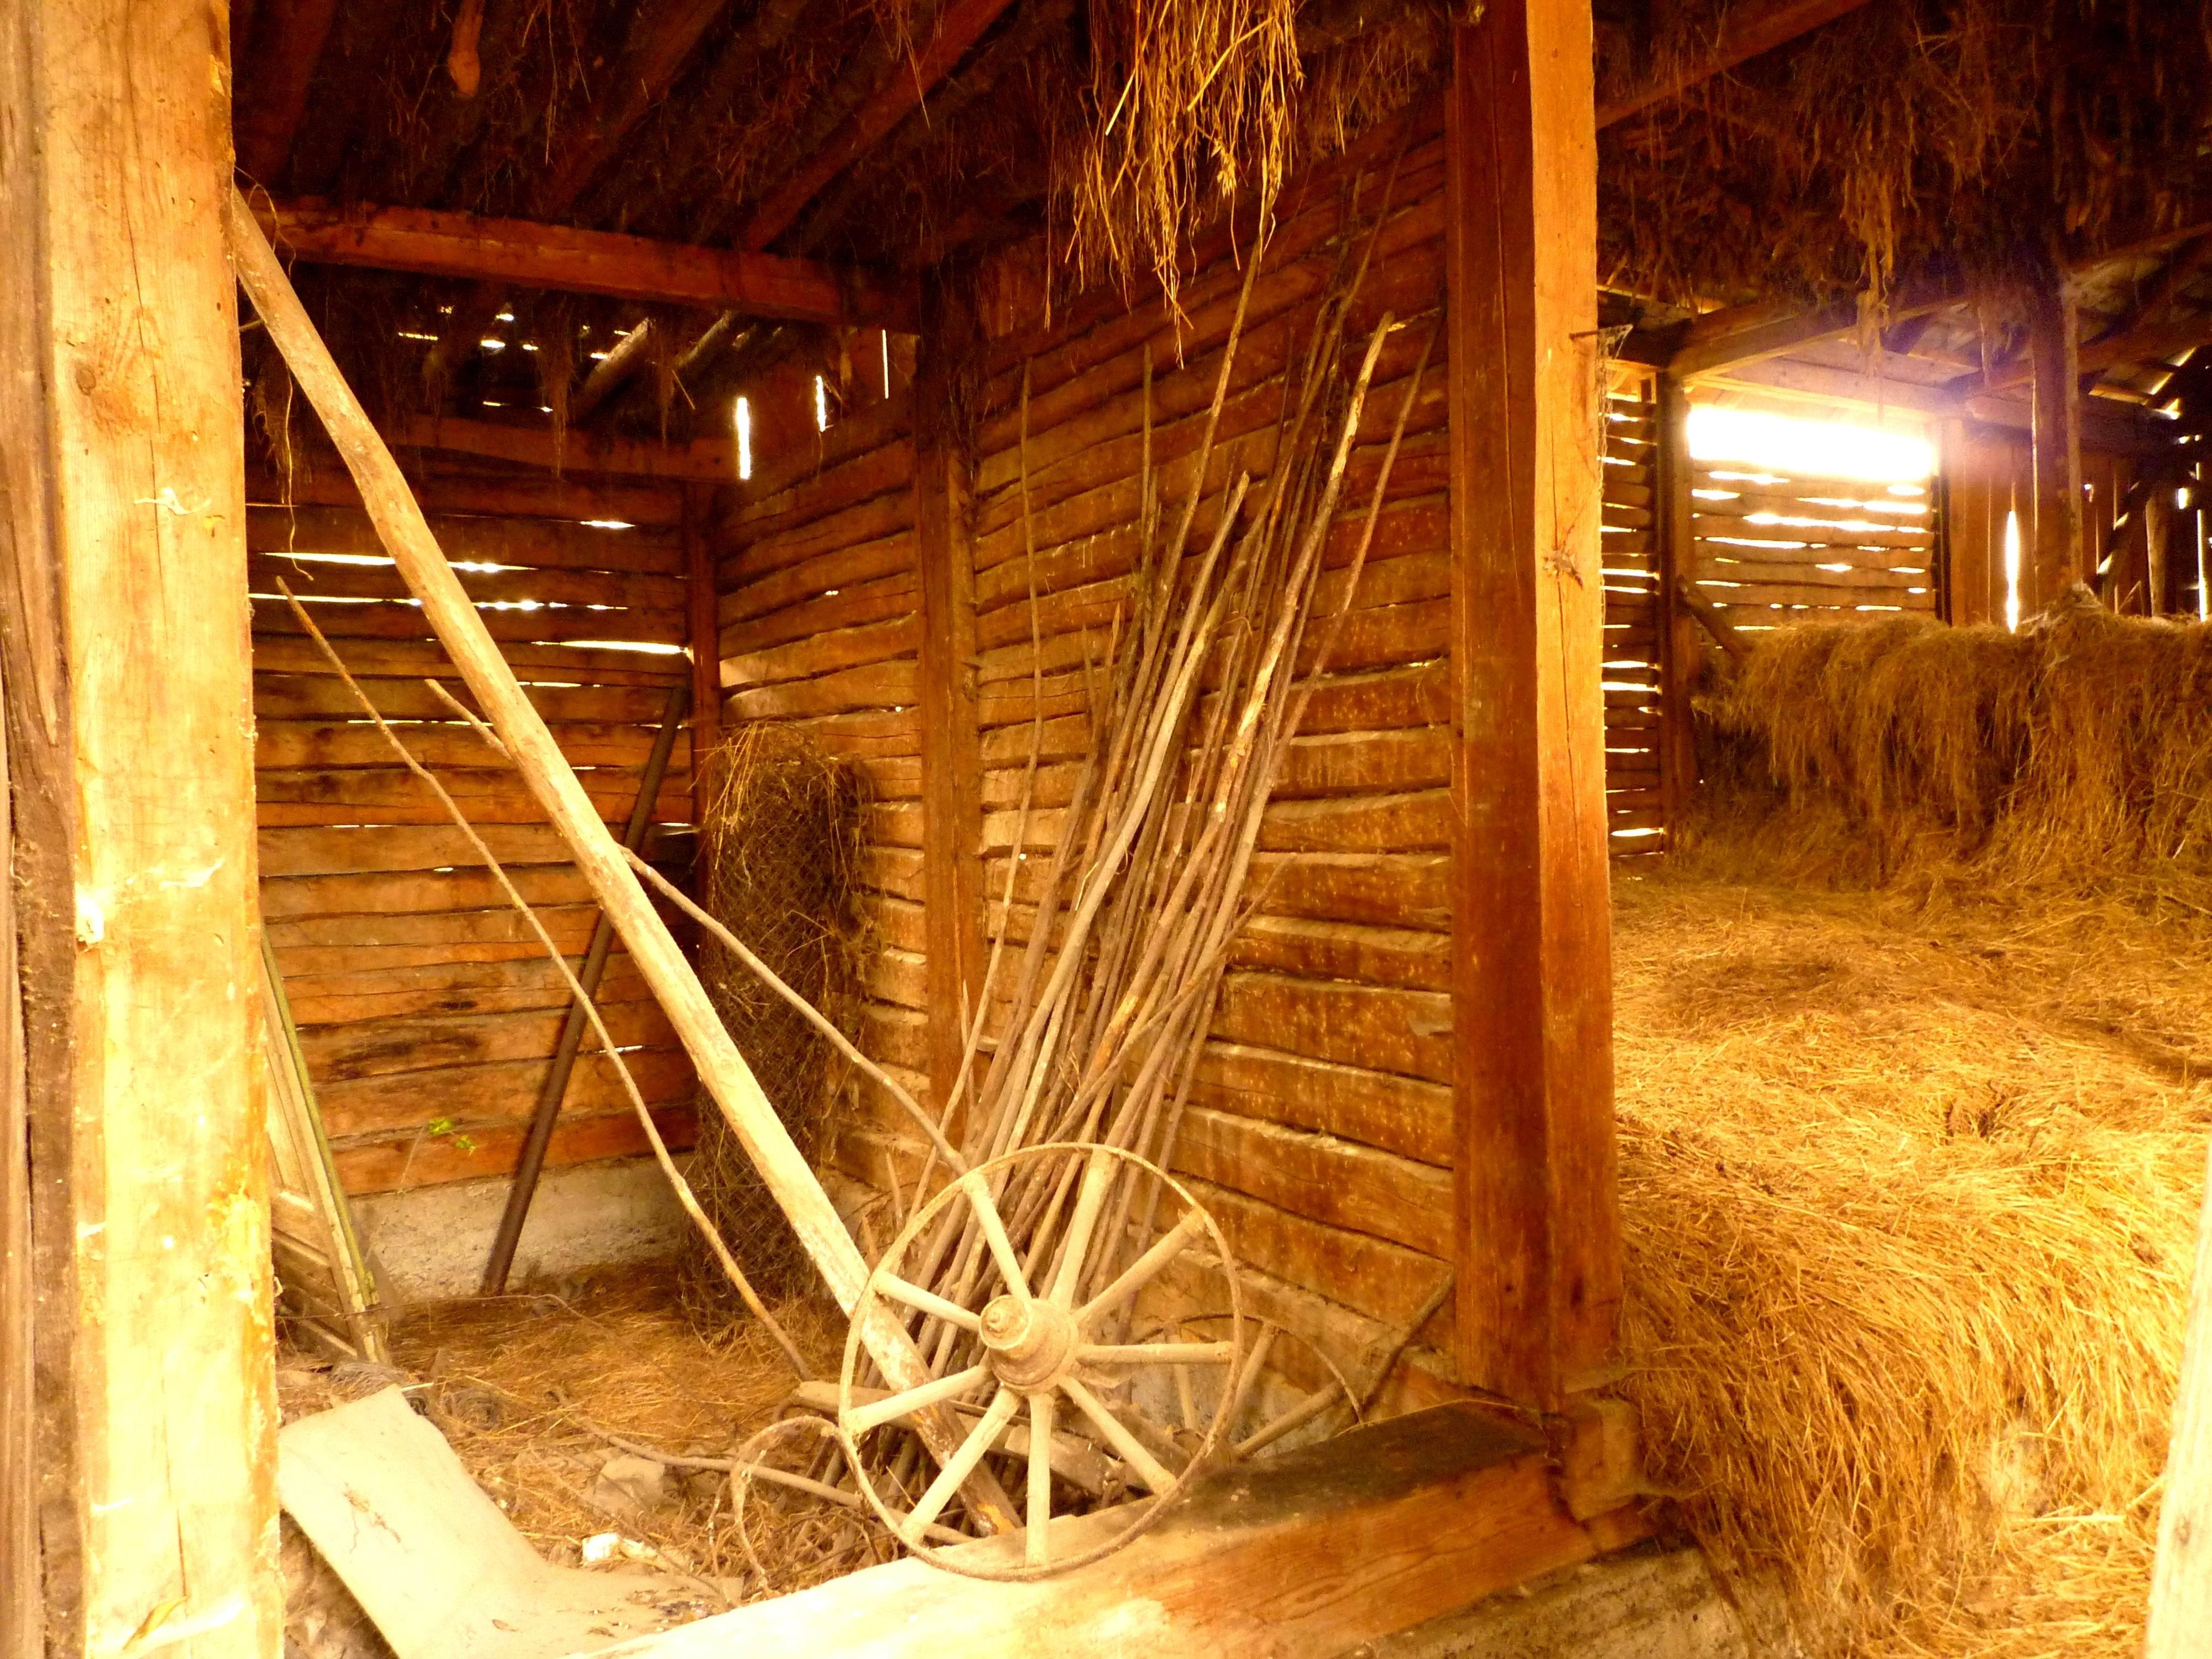 General 4000x3000 interior straw wheels barns hay